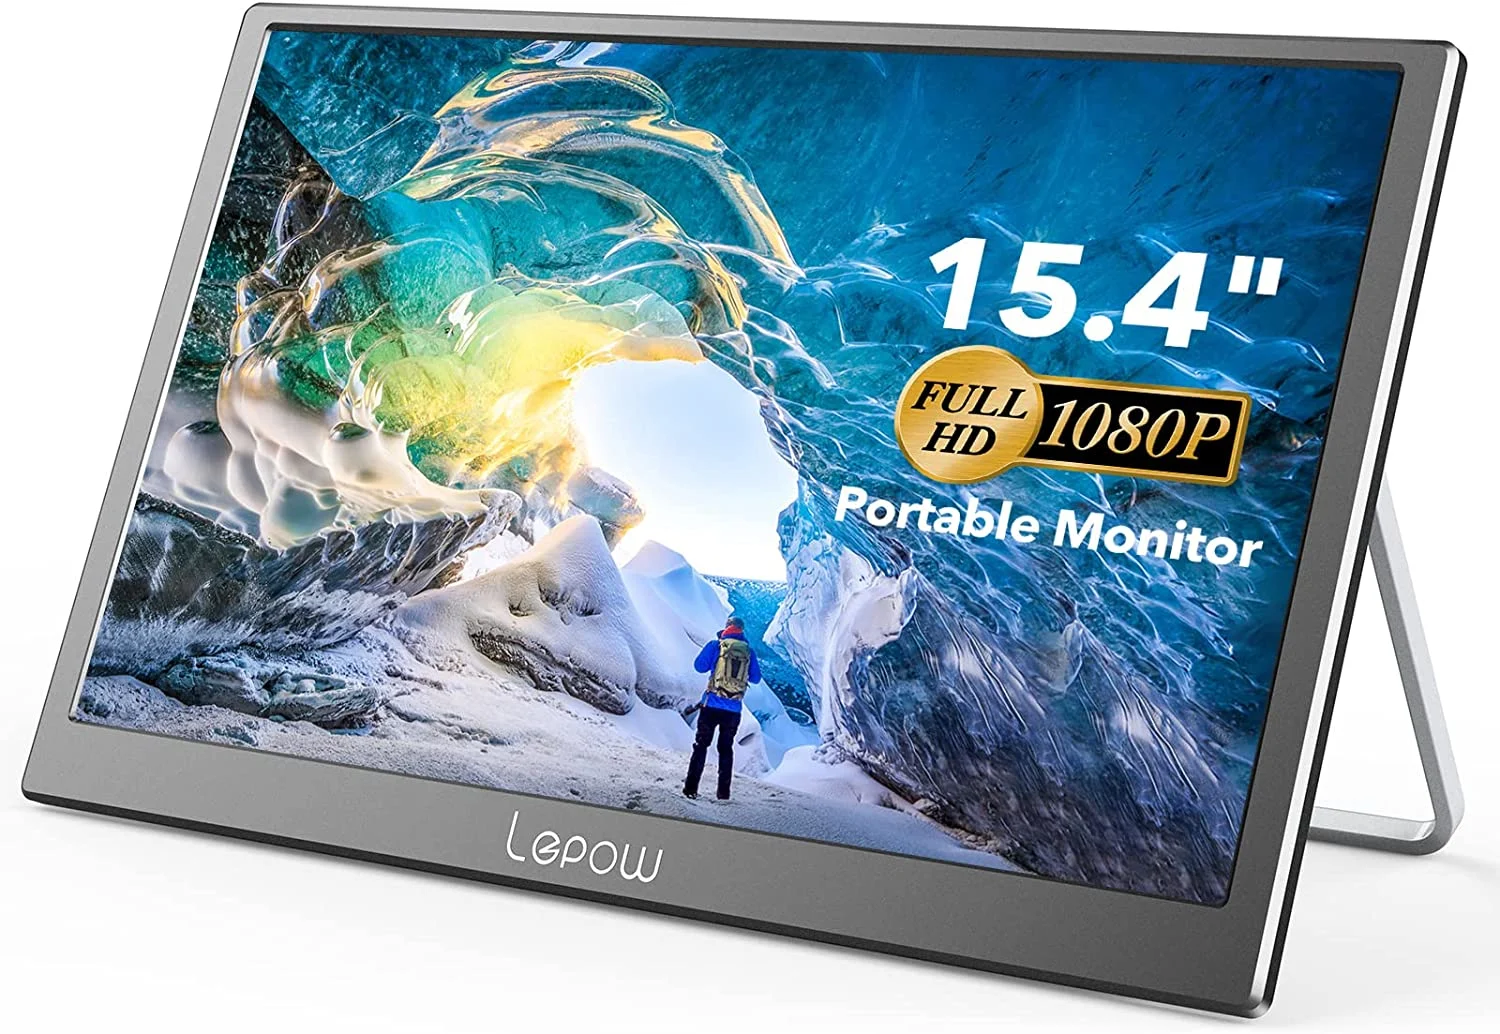 LePow C2S portable monitor